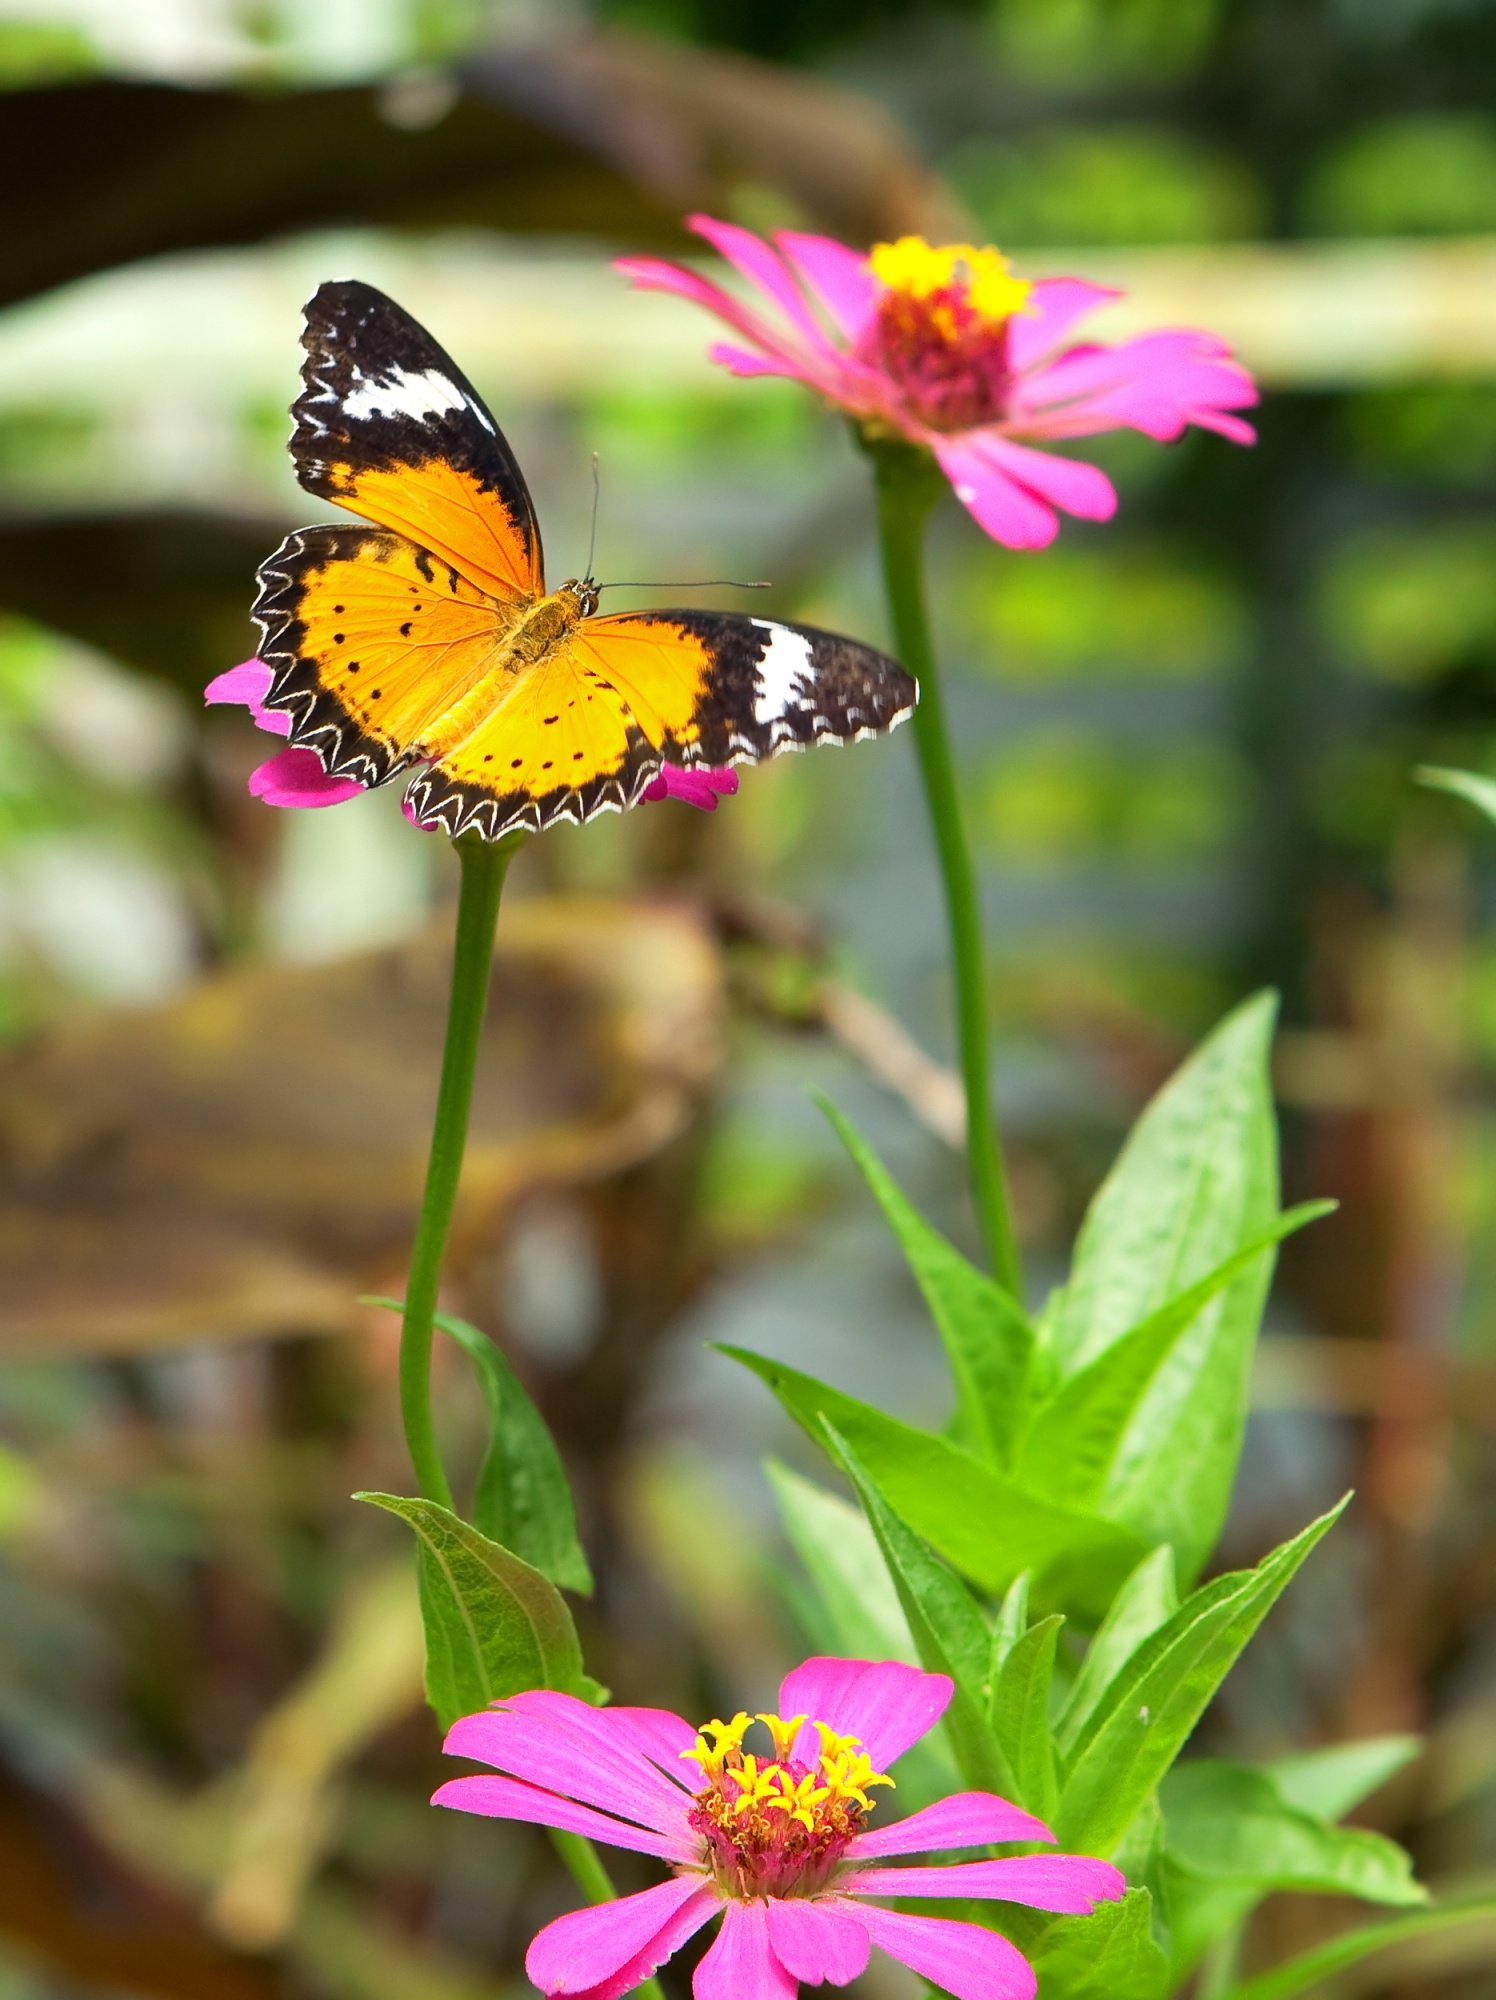 Popular Flower Choices for a Butterfly Garden